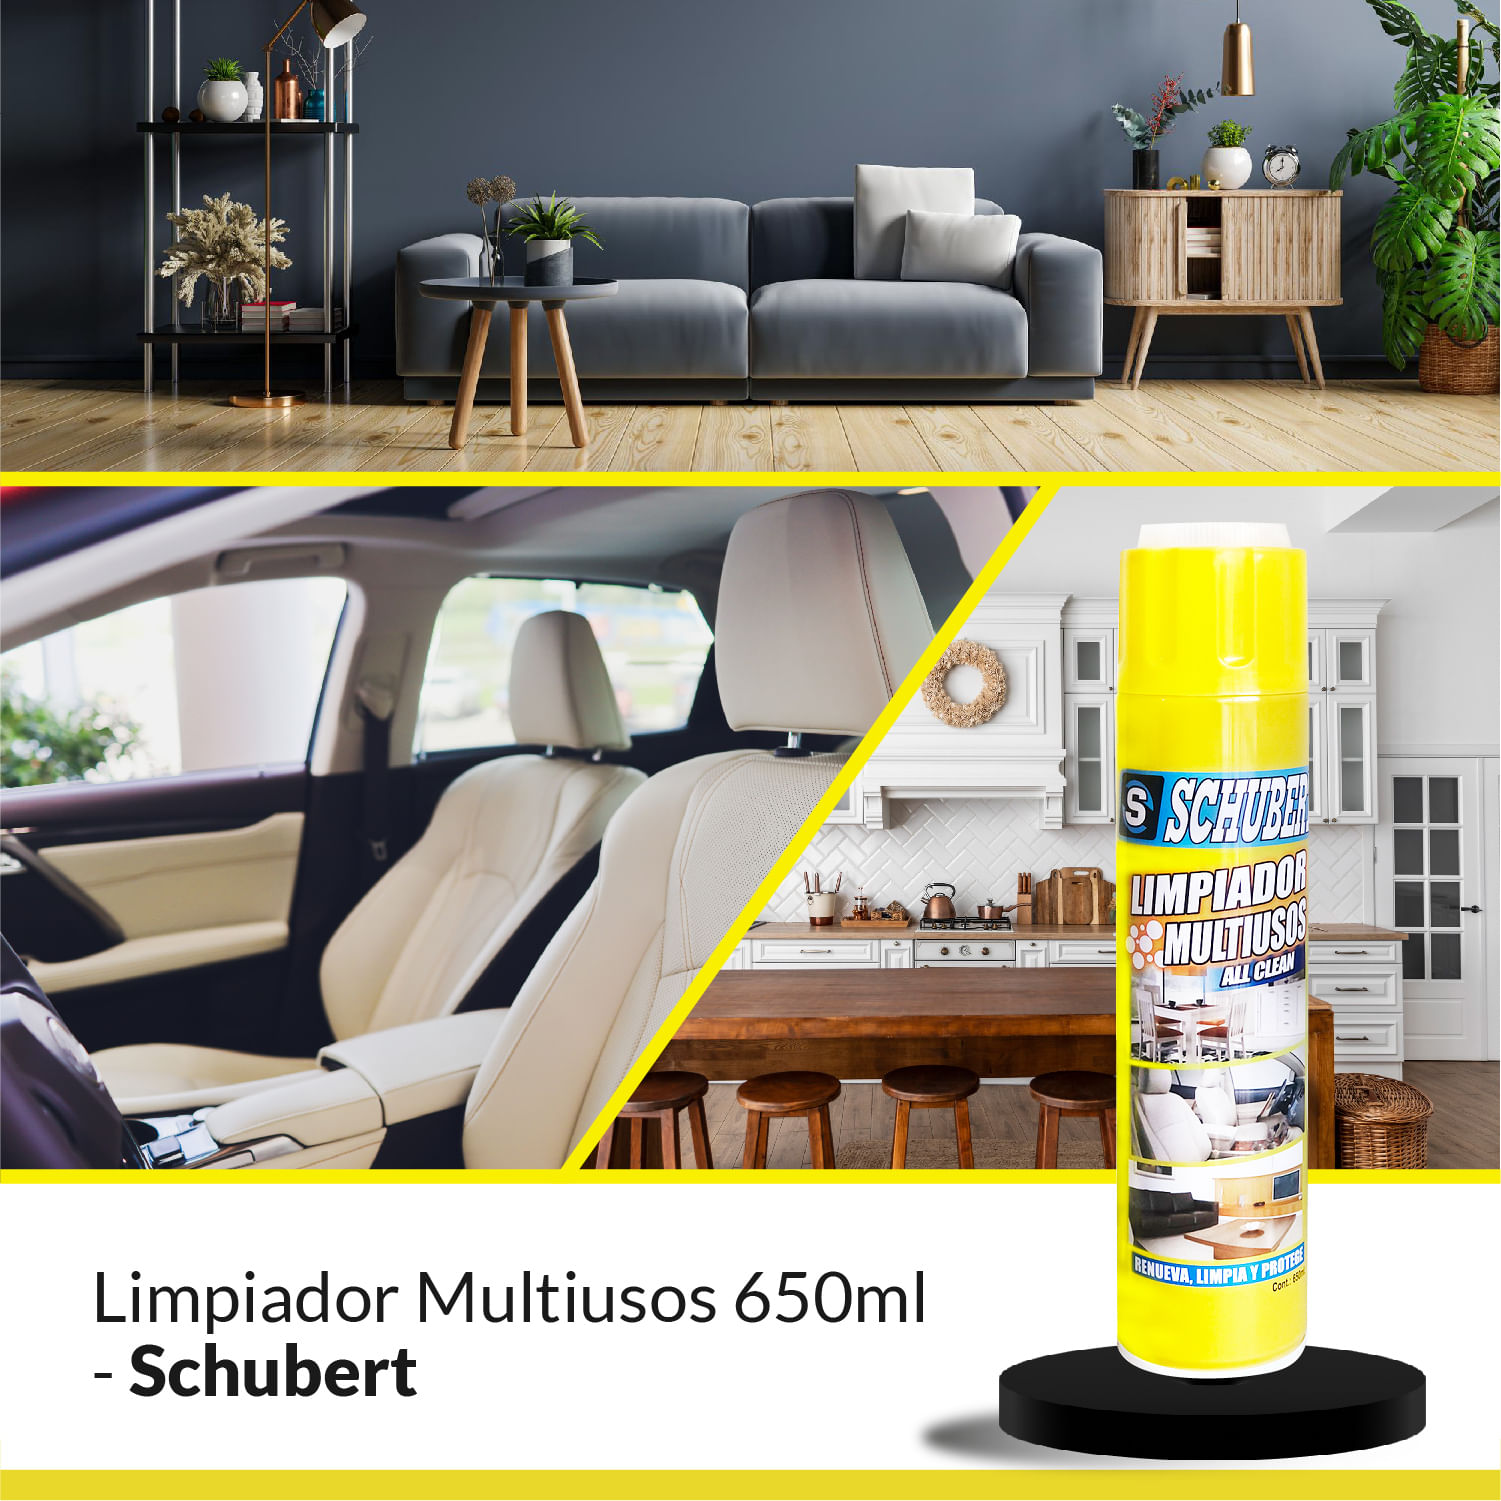 5 Limpiador Multiusos 650ml - Schubert - Shopstar